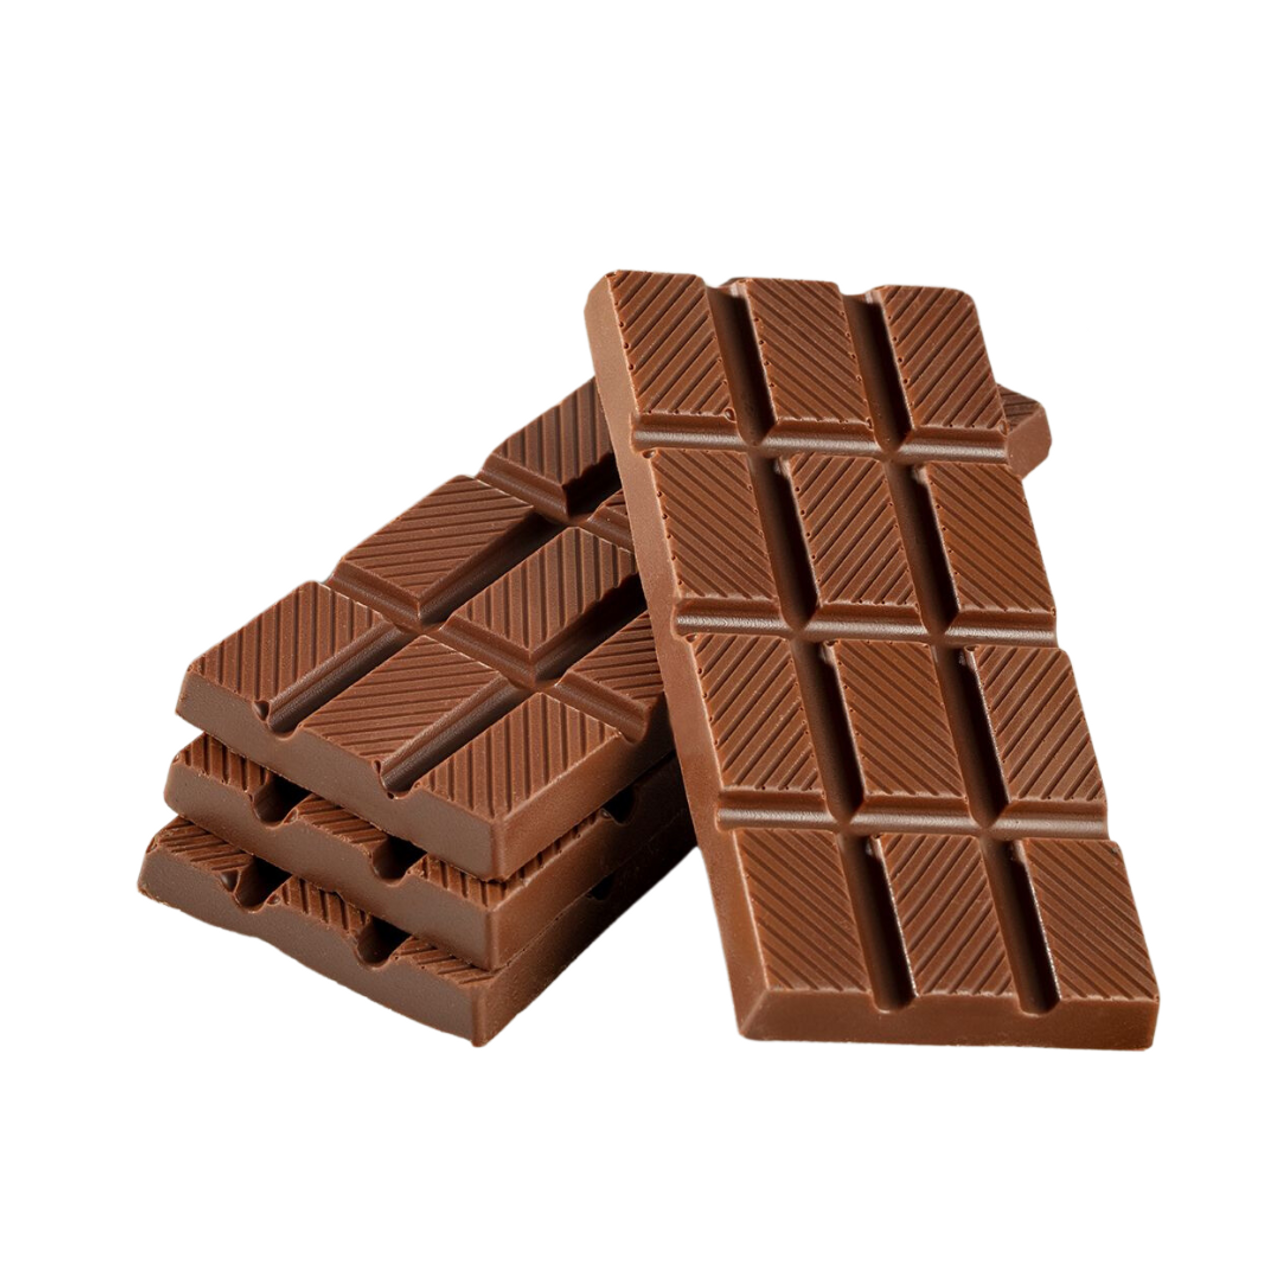 Chocolate Bar - Milkless